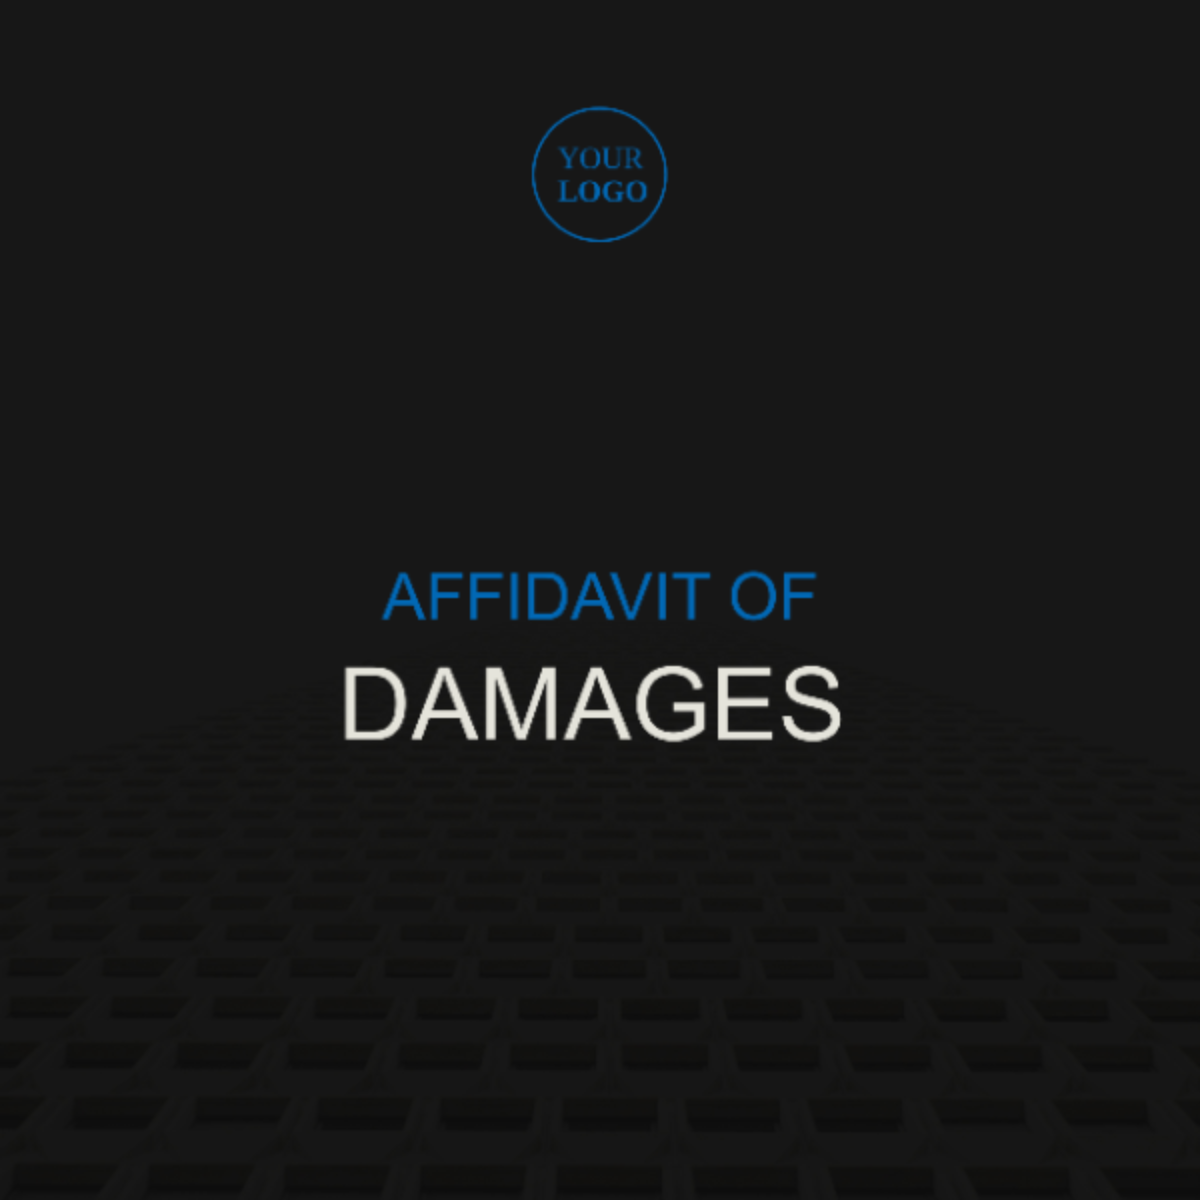 Affidavit of Damages Template